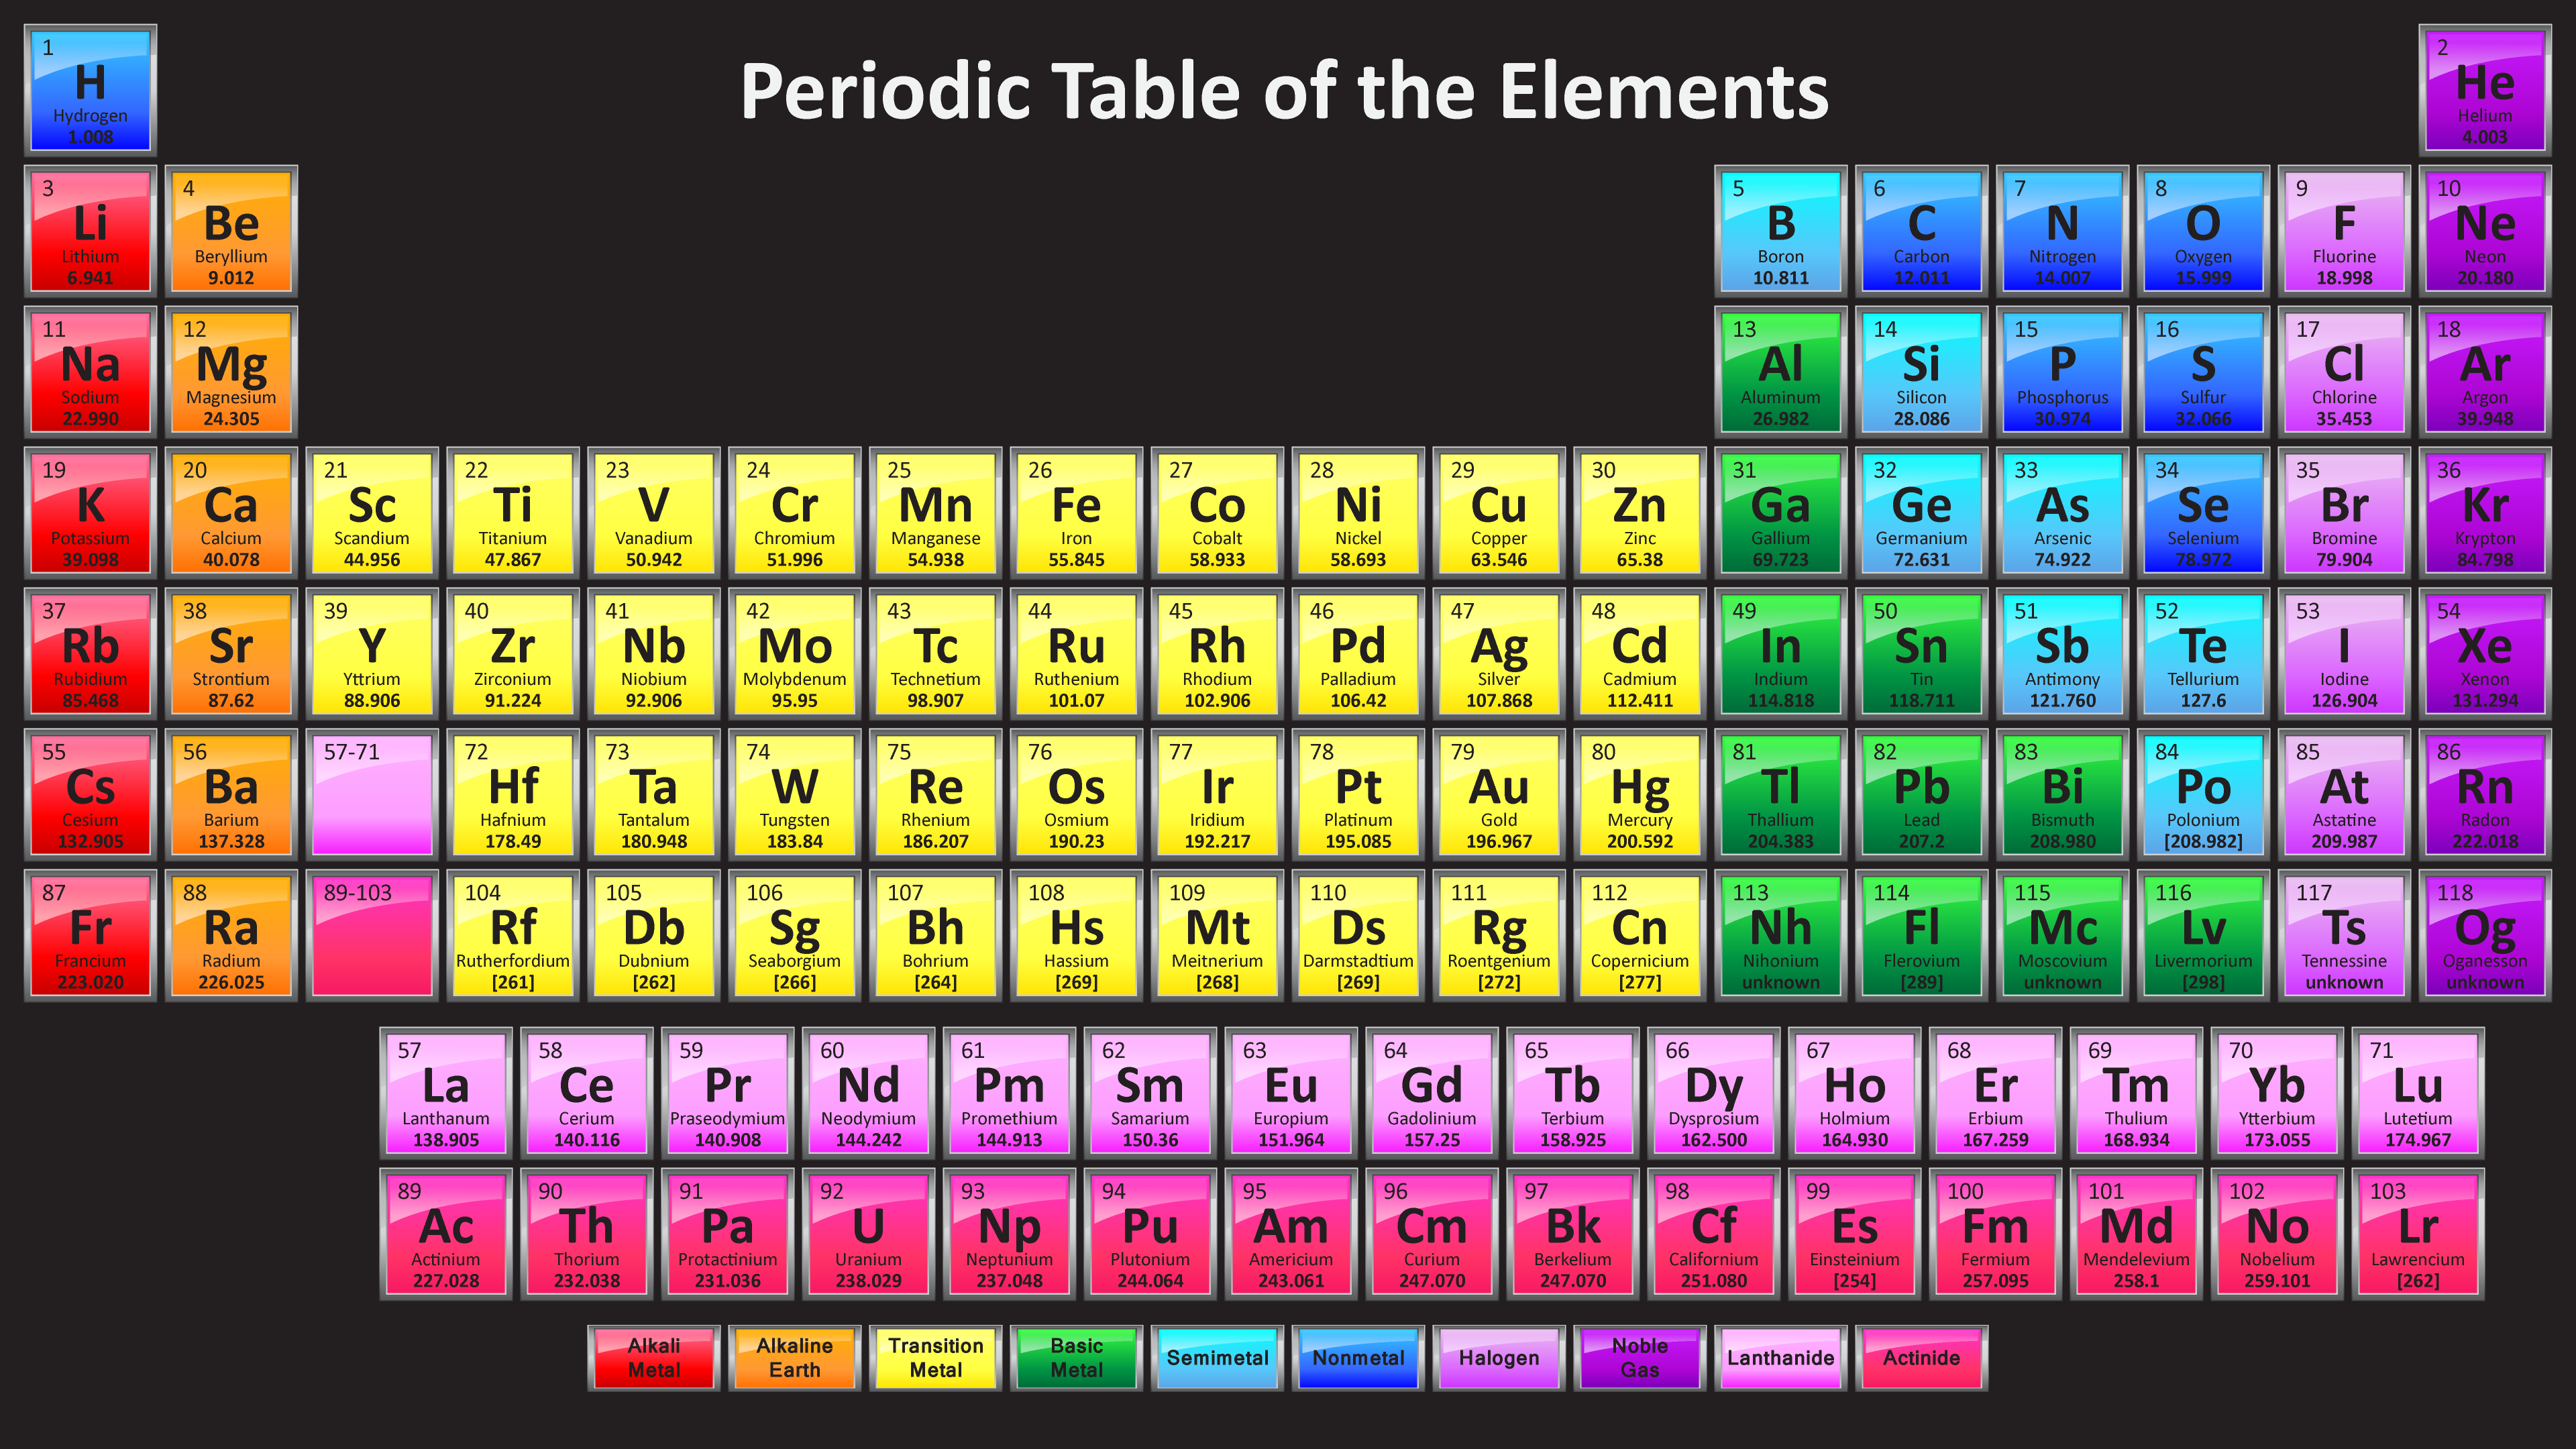 Periodic Table Trivia